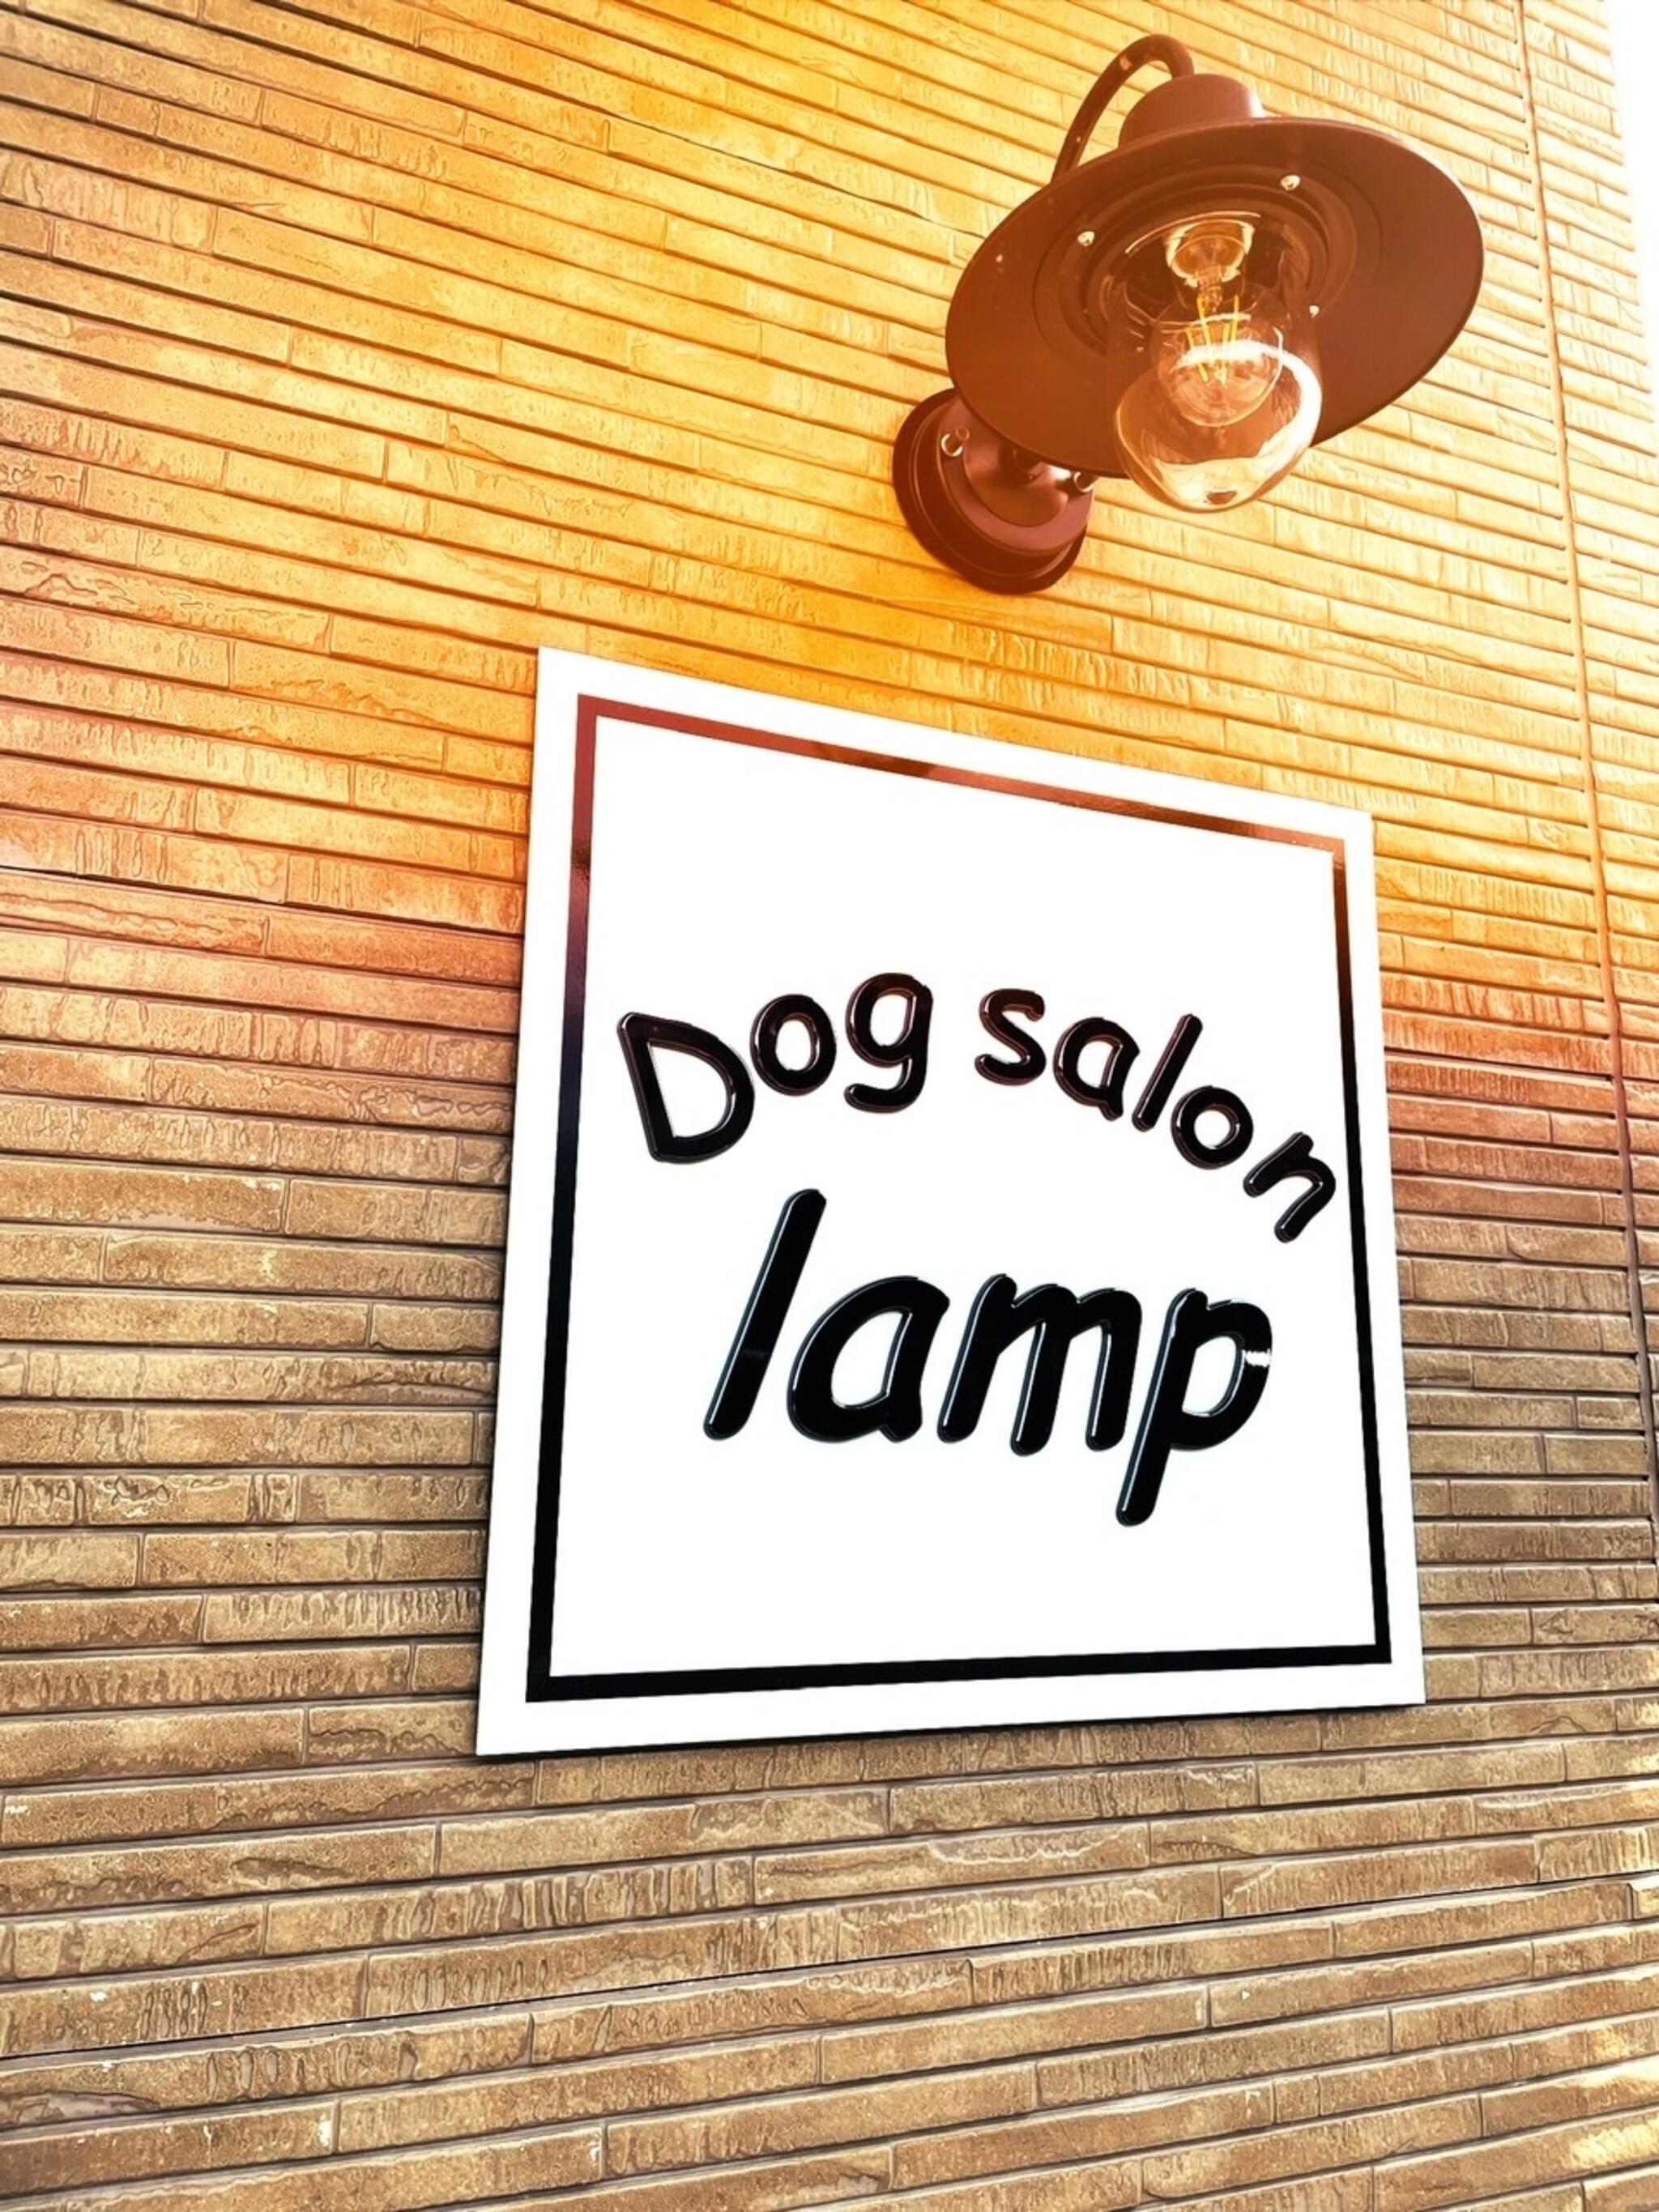 Dogsalon lampの代表写真1